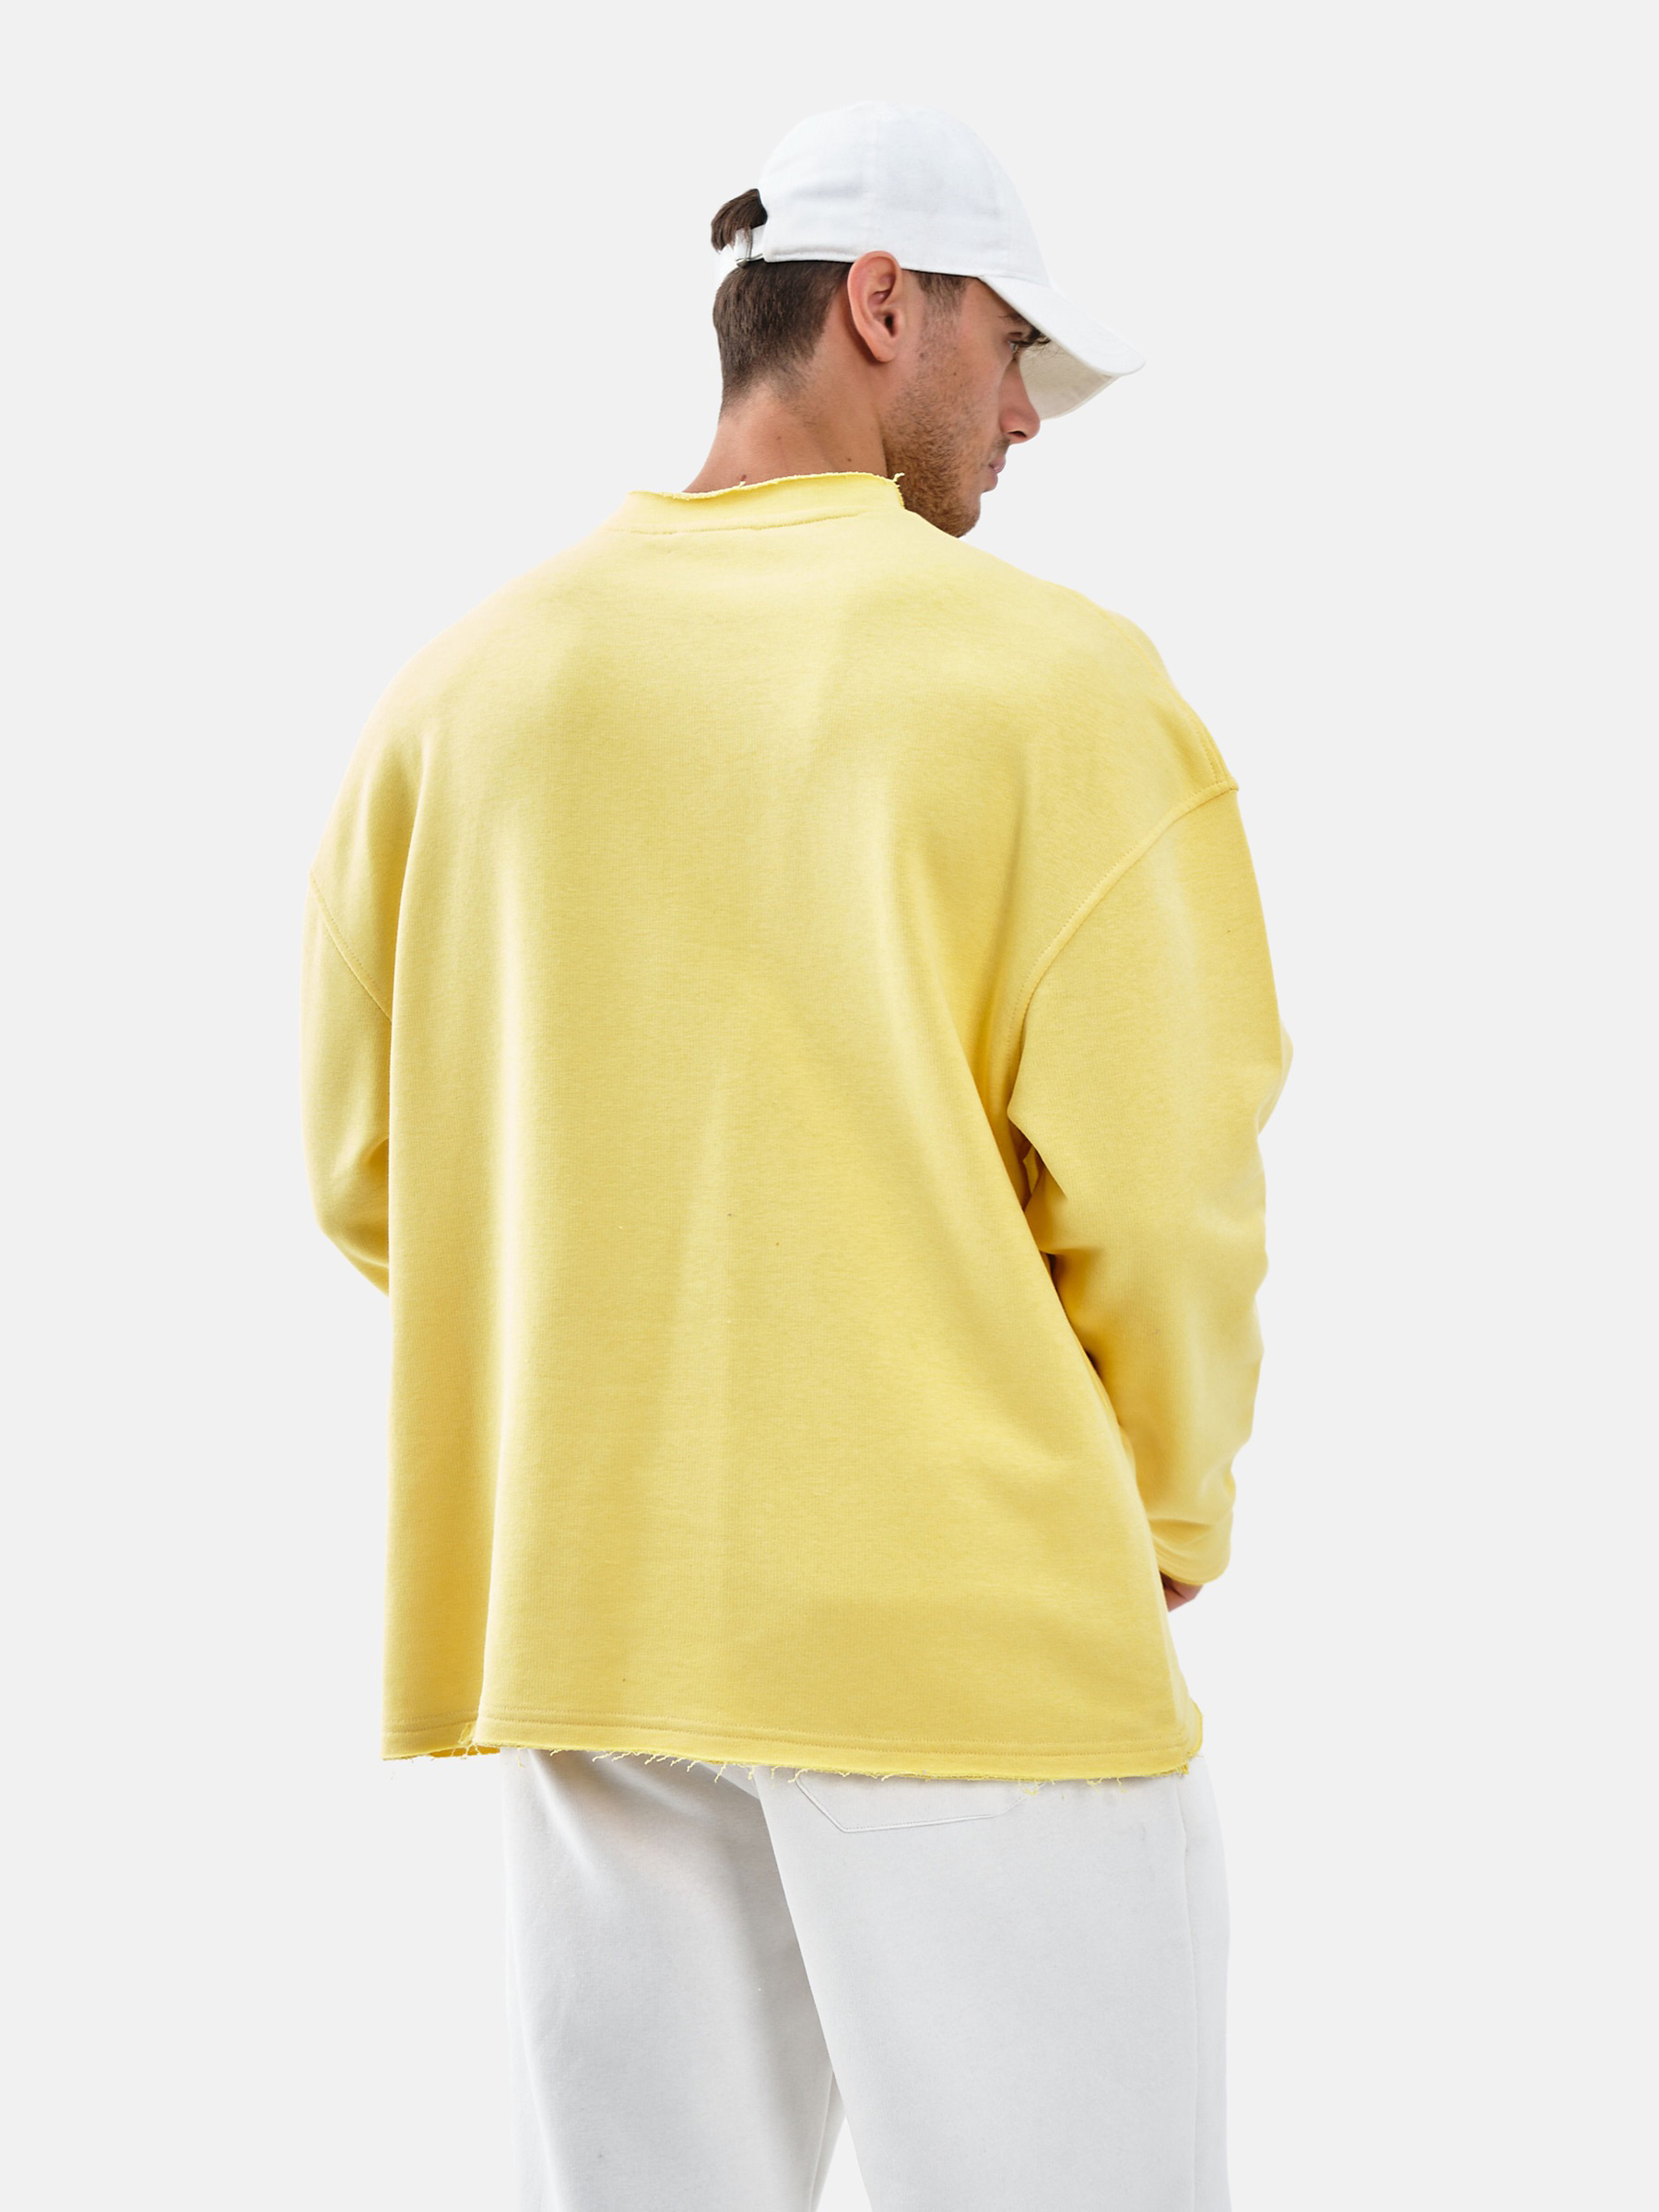 Melvin Yellow Sweater 